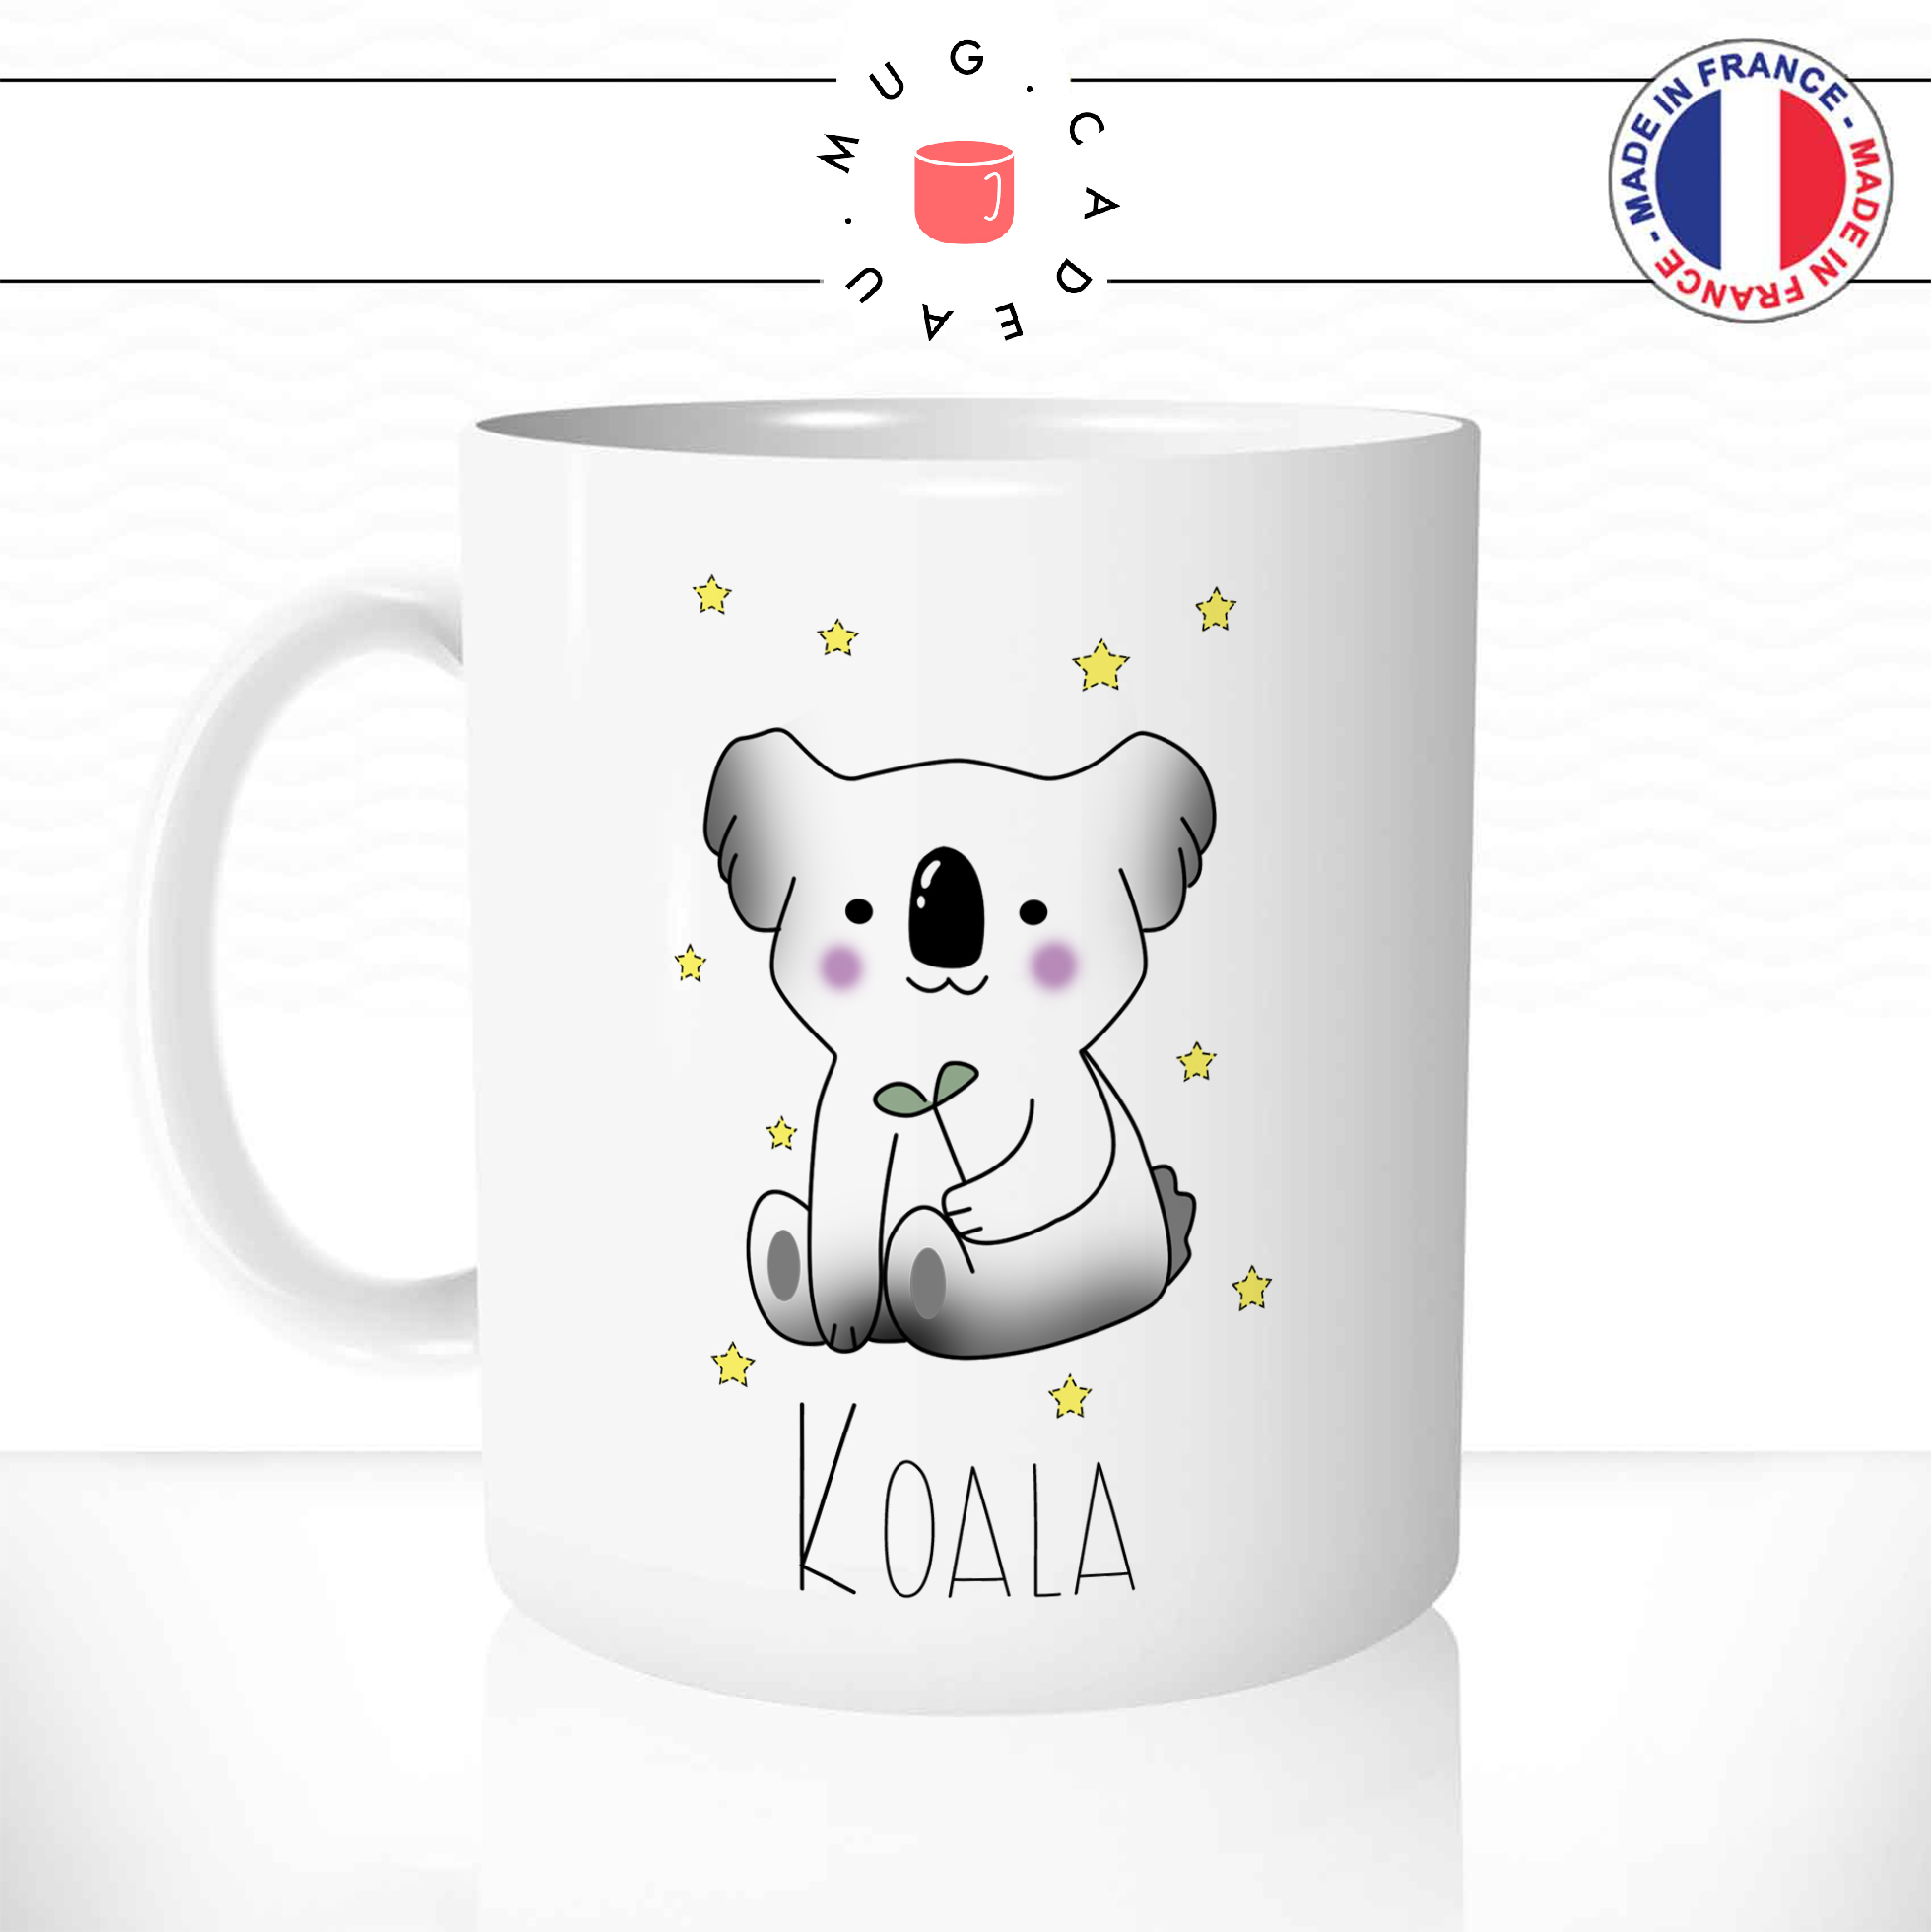 mug-tasse-ref6-koala-blanc-gris-mignon-etoiles-ecriture-cafe-the-mugs-tasses-personnalise-anse-gauche